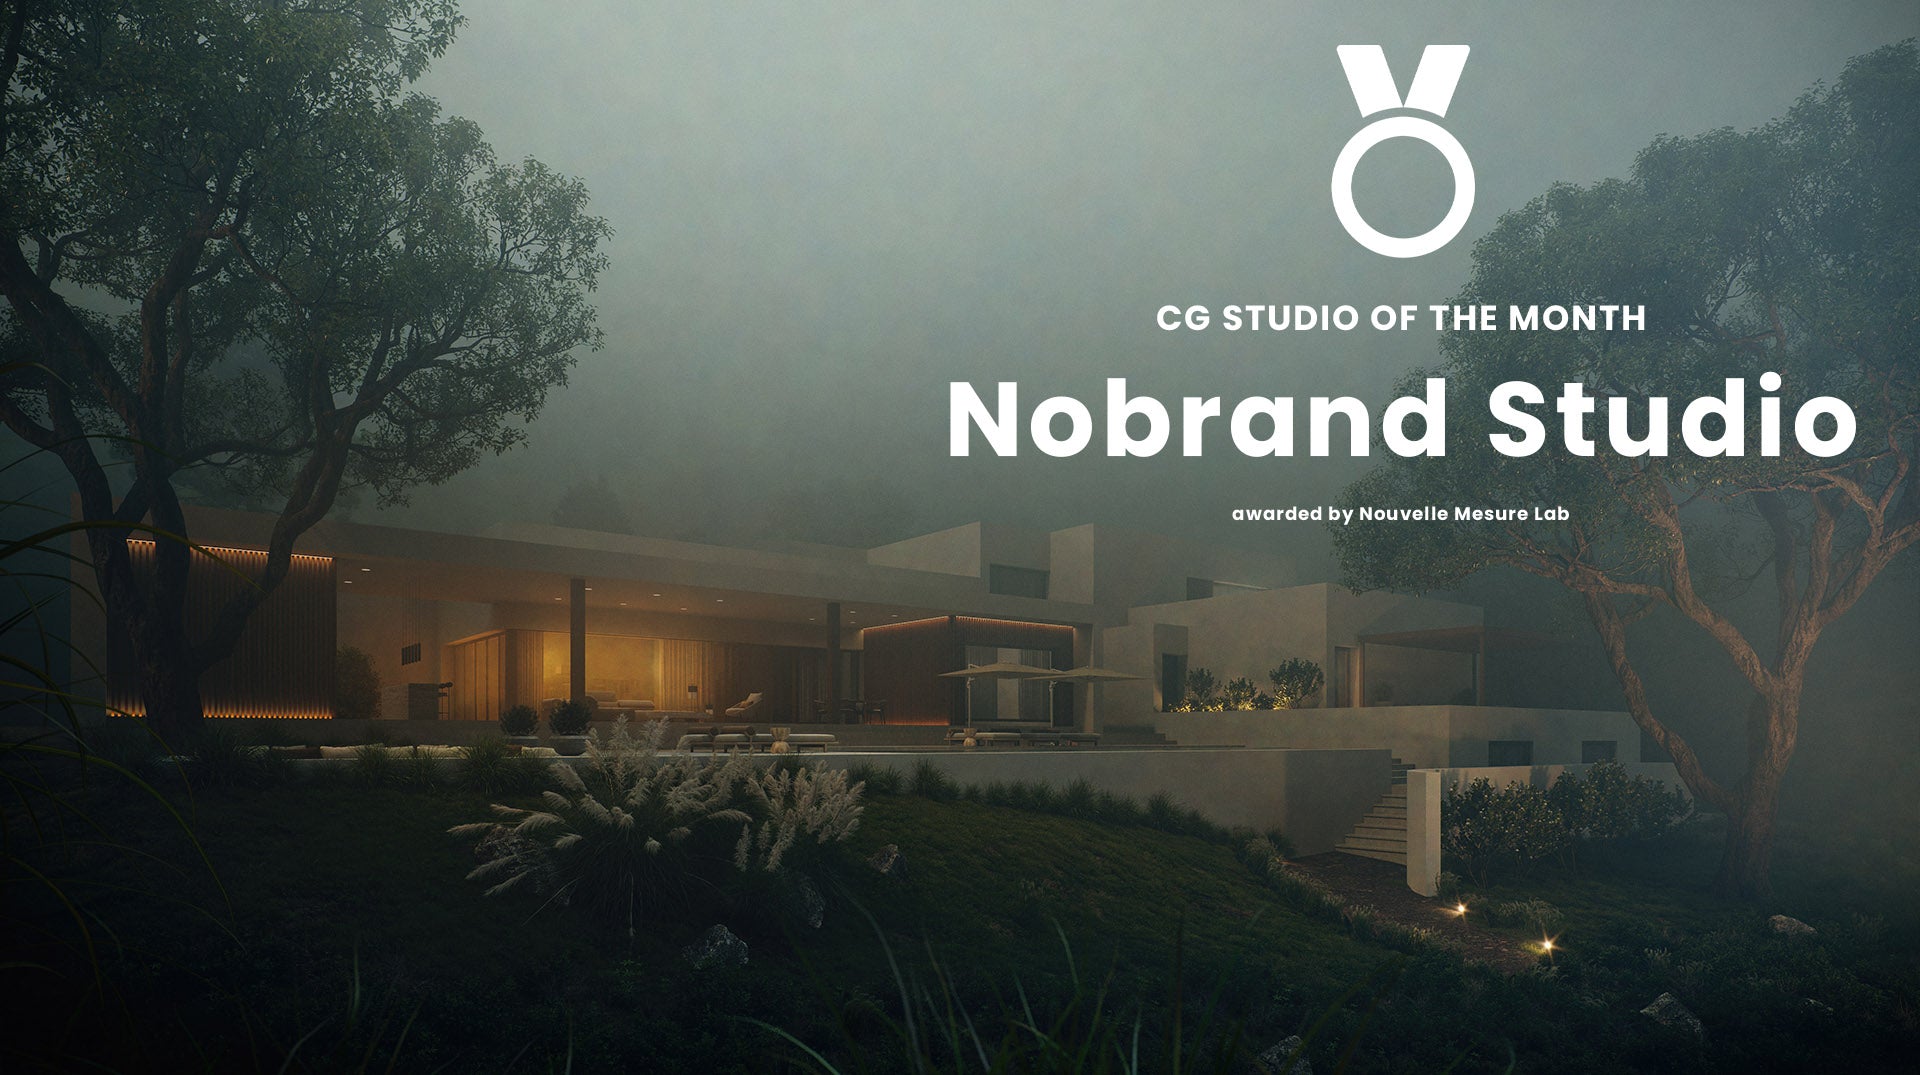 CG Studio of the month: Nobrand Studio